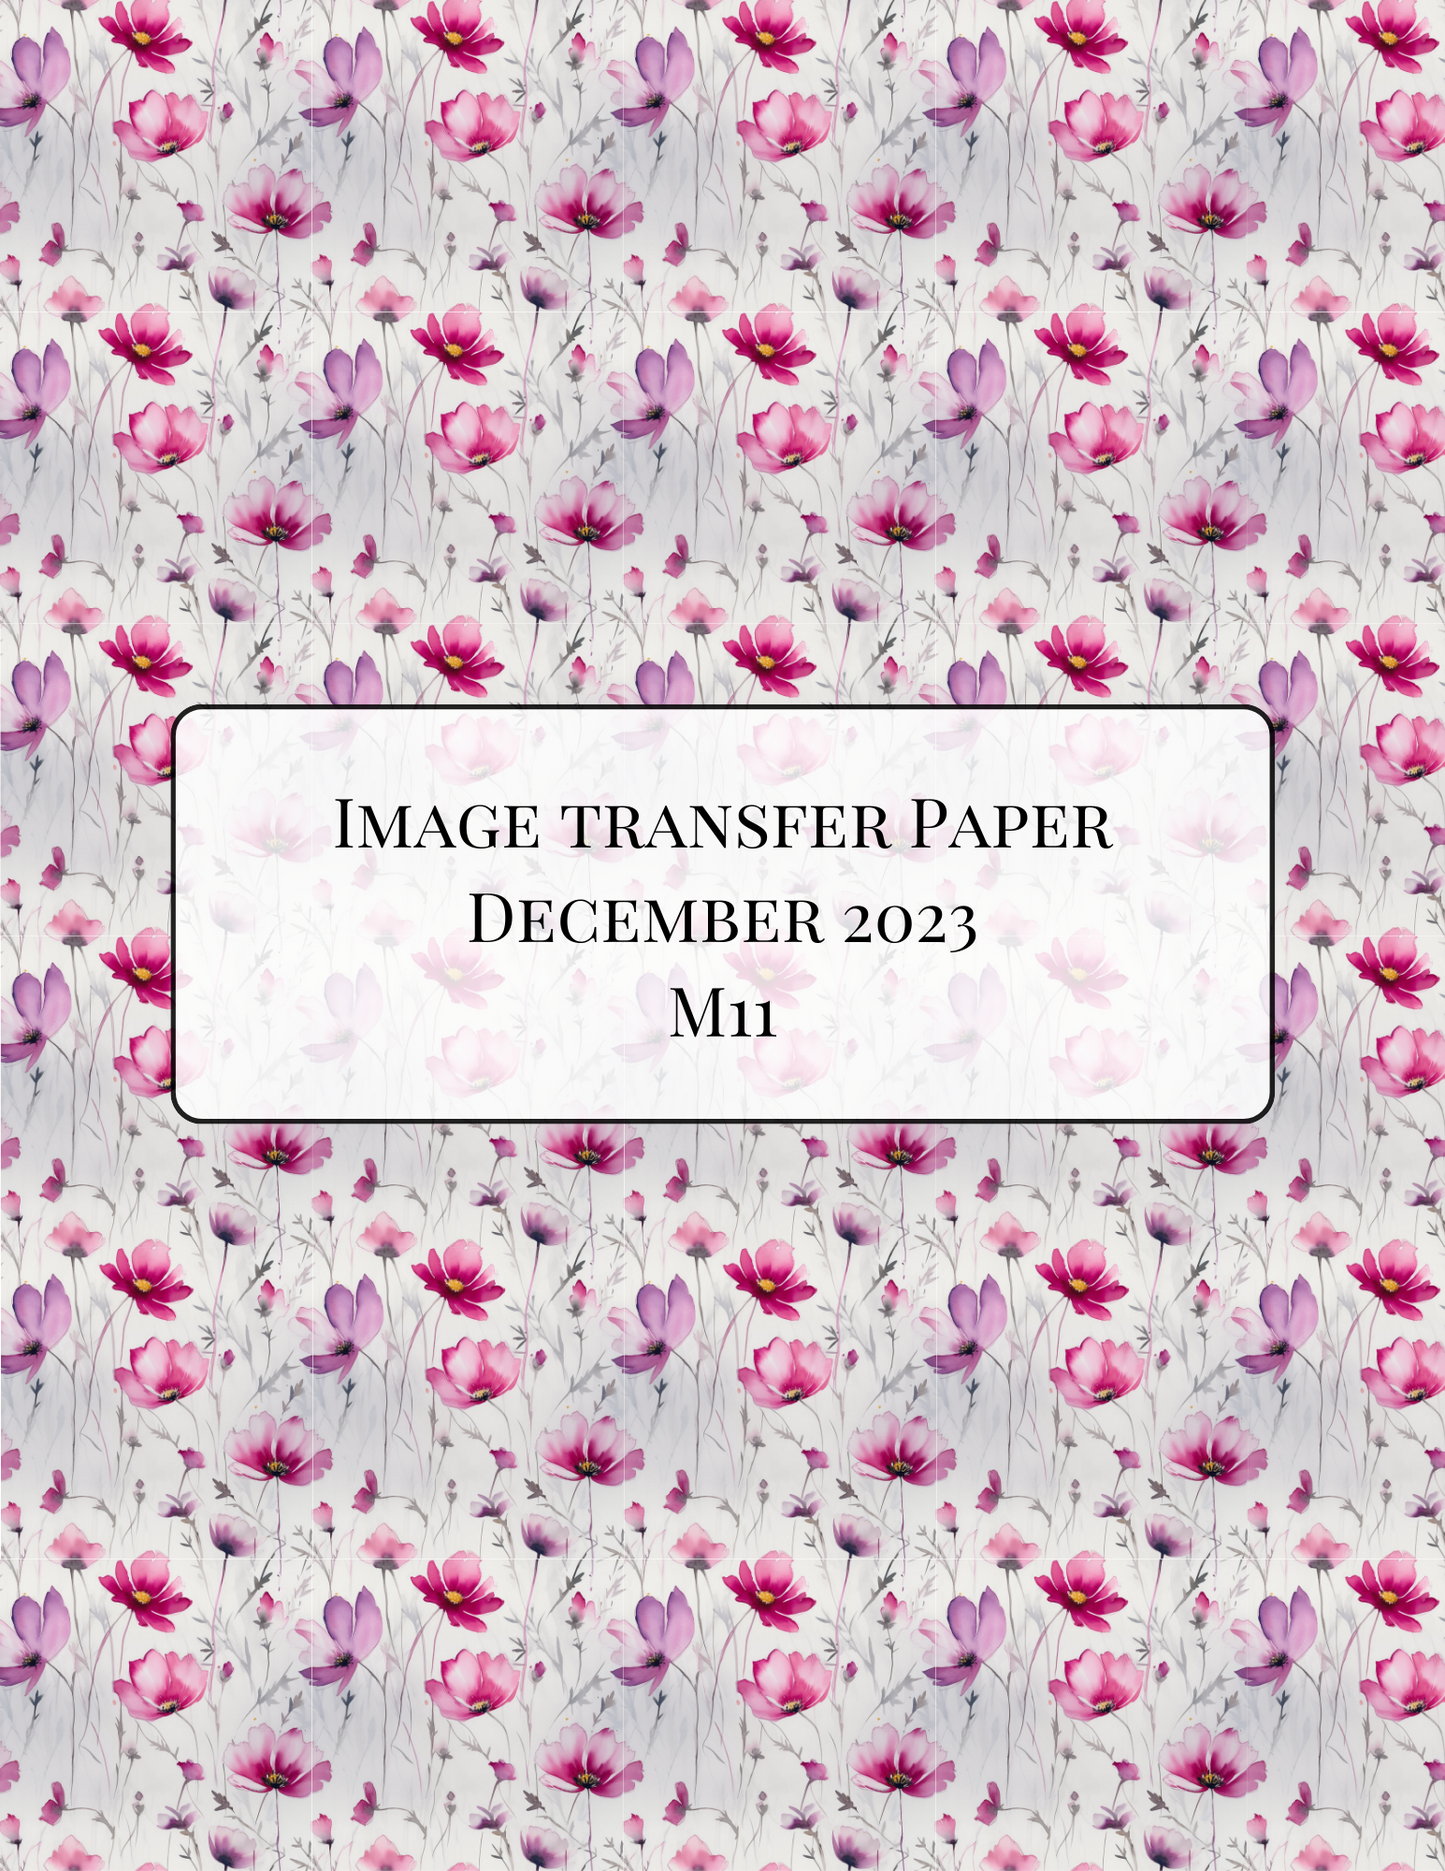 M11 Transfer Paper - December 2023 Launch